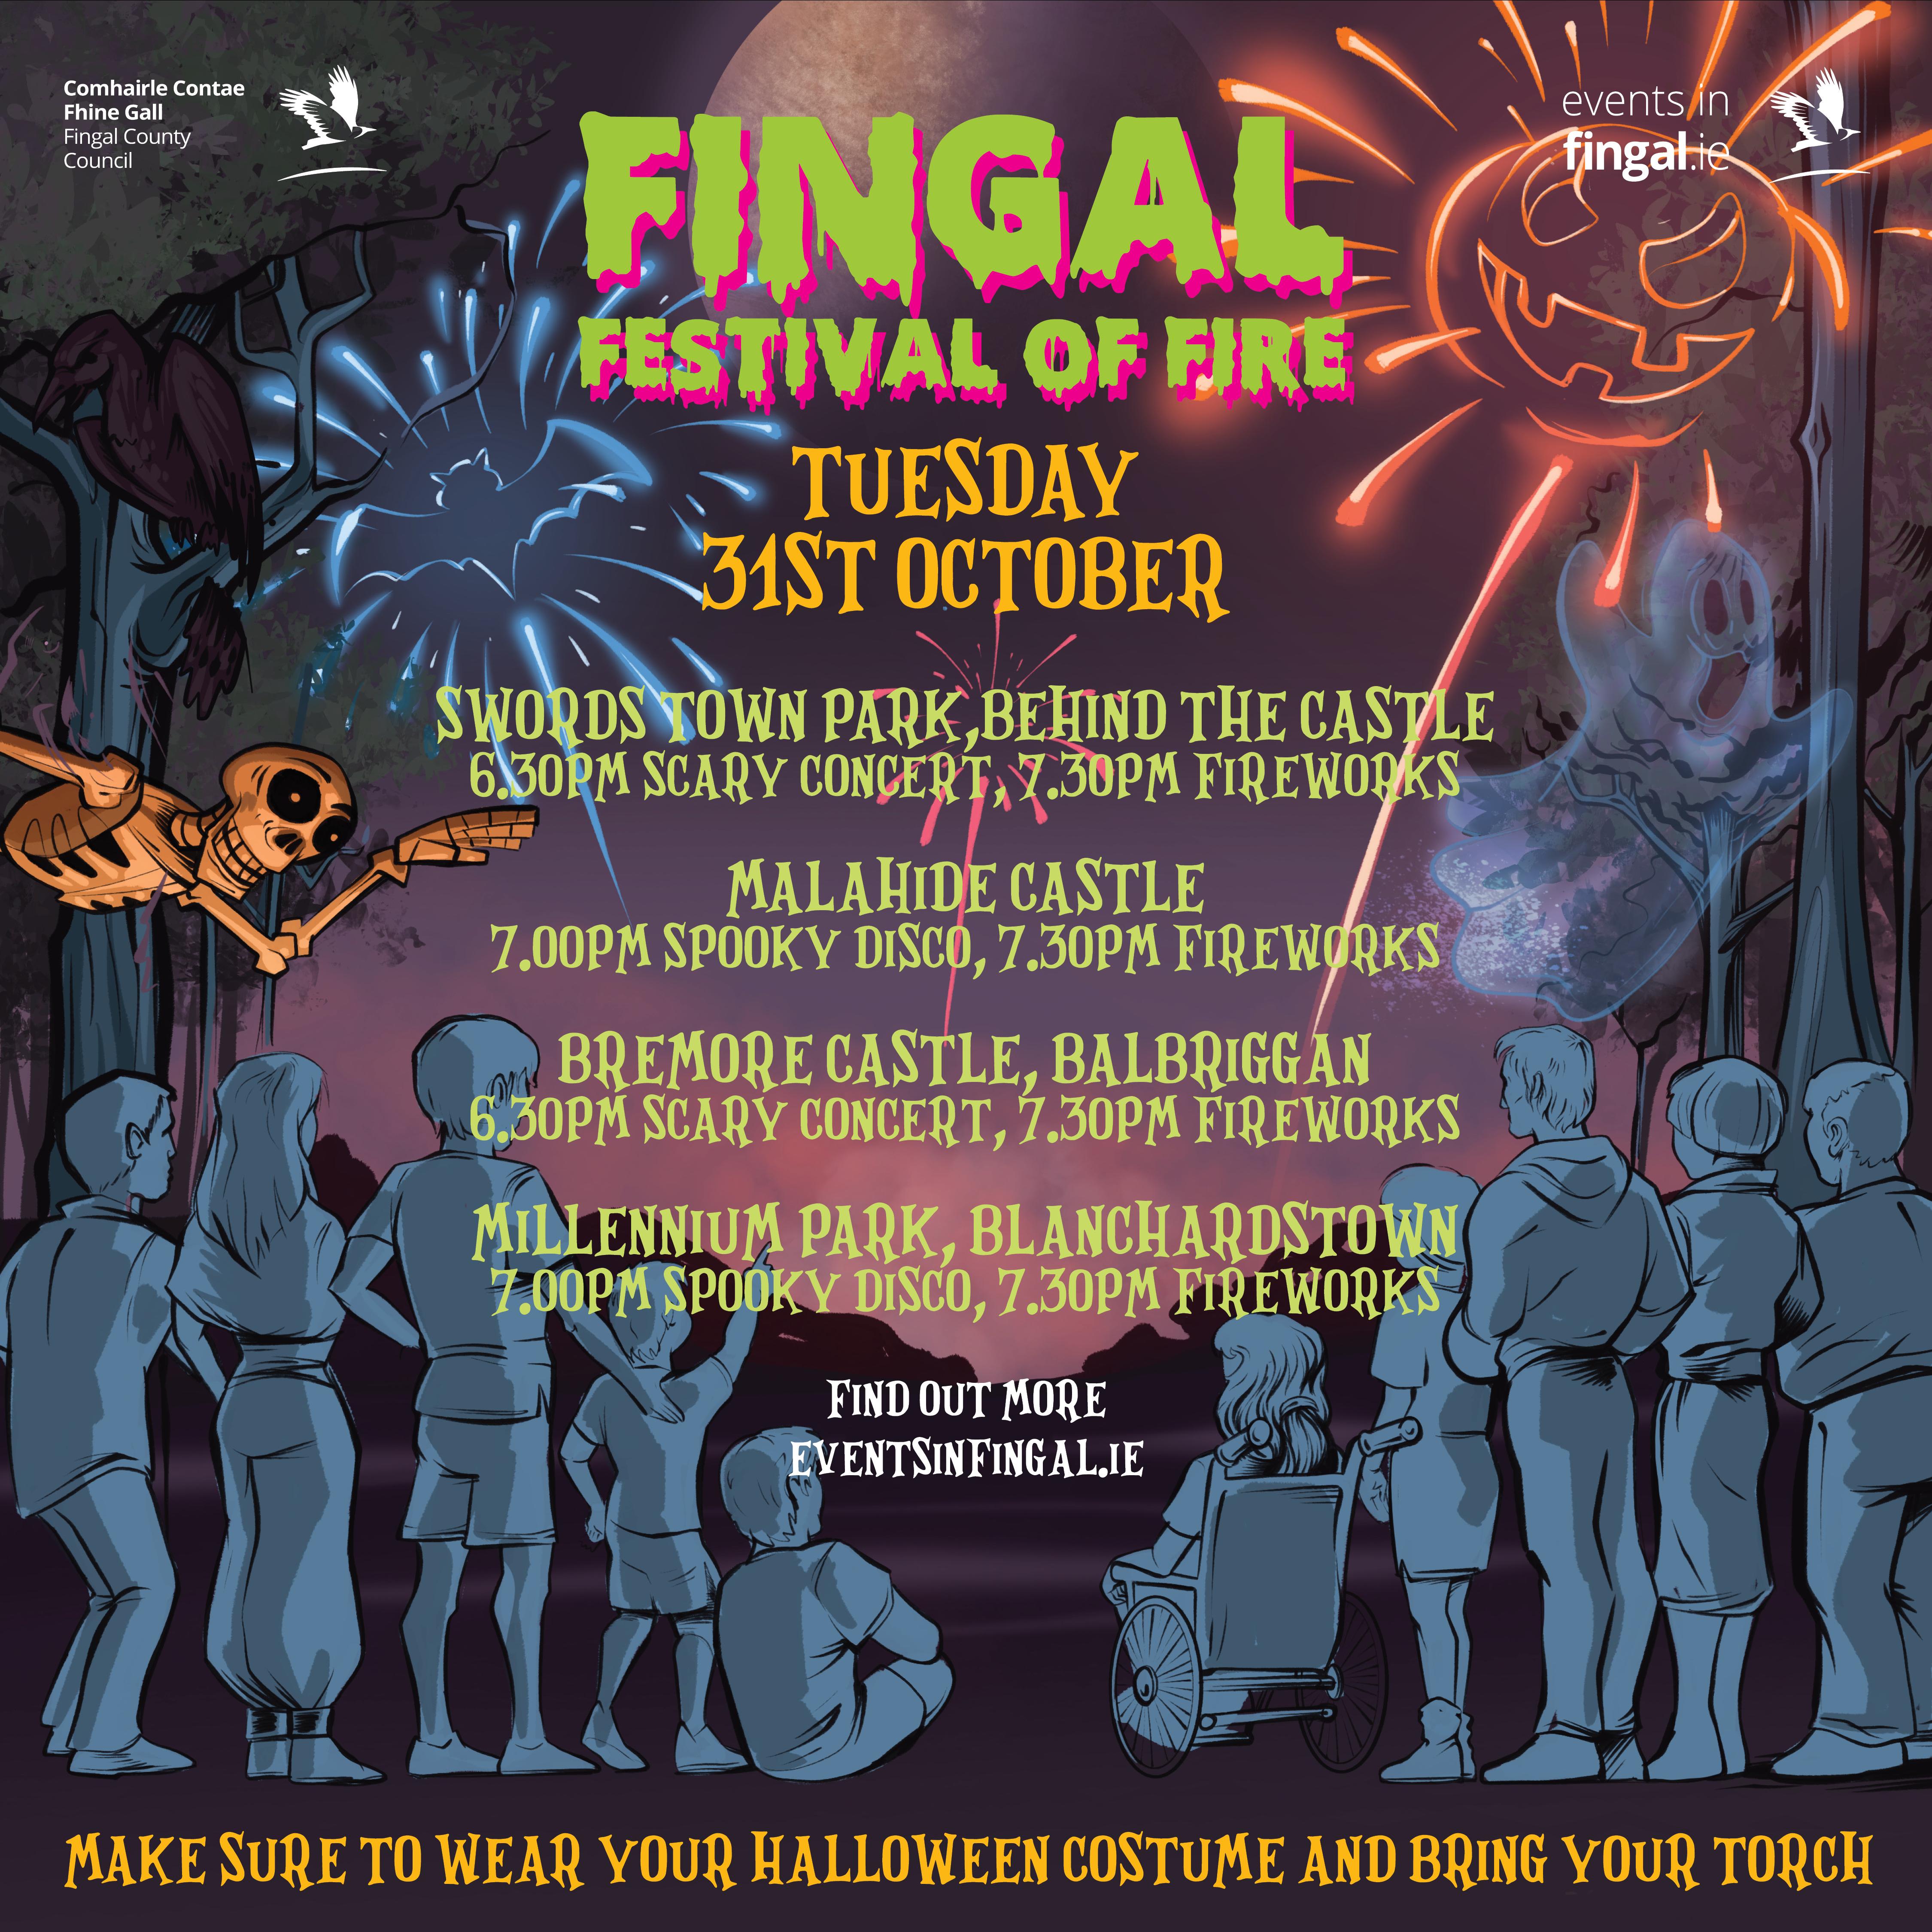 Festival of Fire